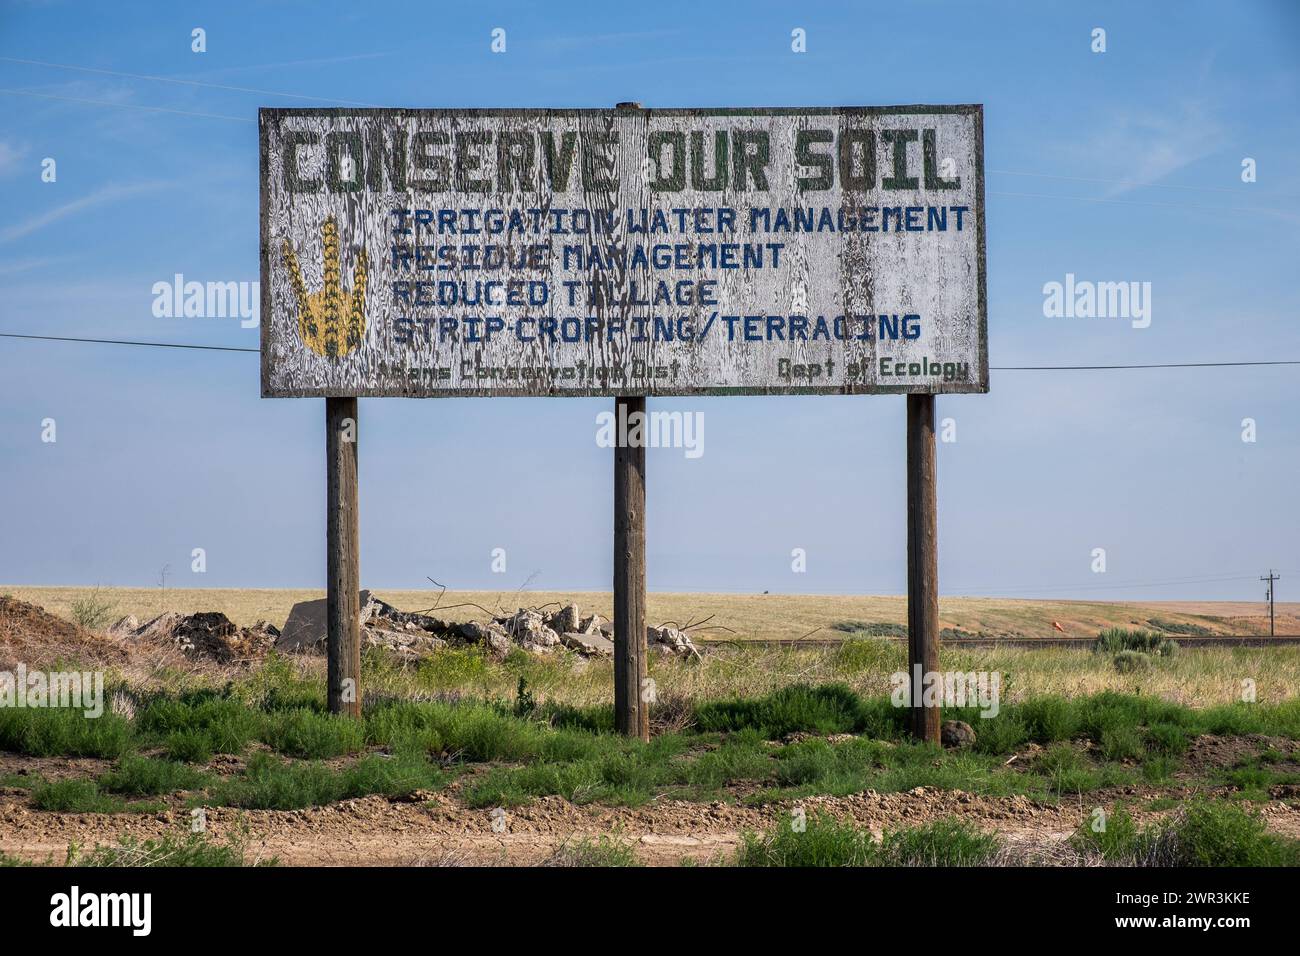 Soil conservation sign along Route 261 Washington State, USA, eastern Washington. Stock Photo